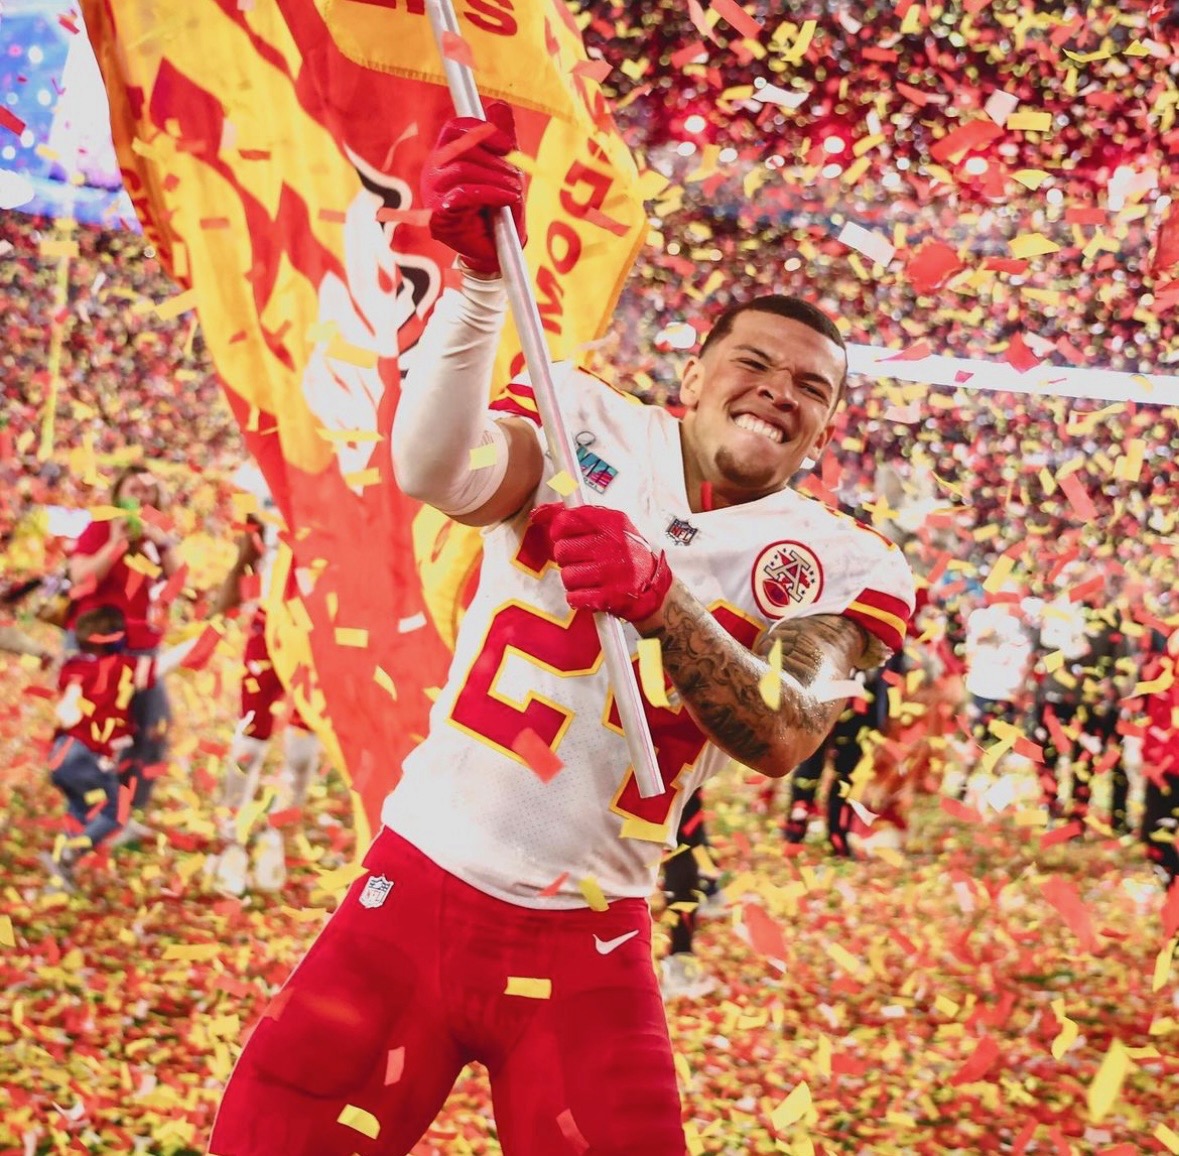 Skyy+Moore+celebrates+his+teams+thrilling+Super+Bowl+victory.